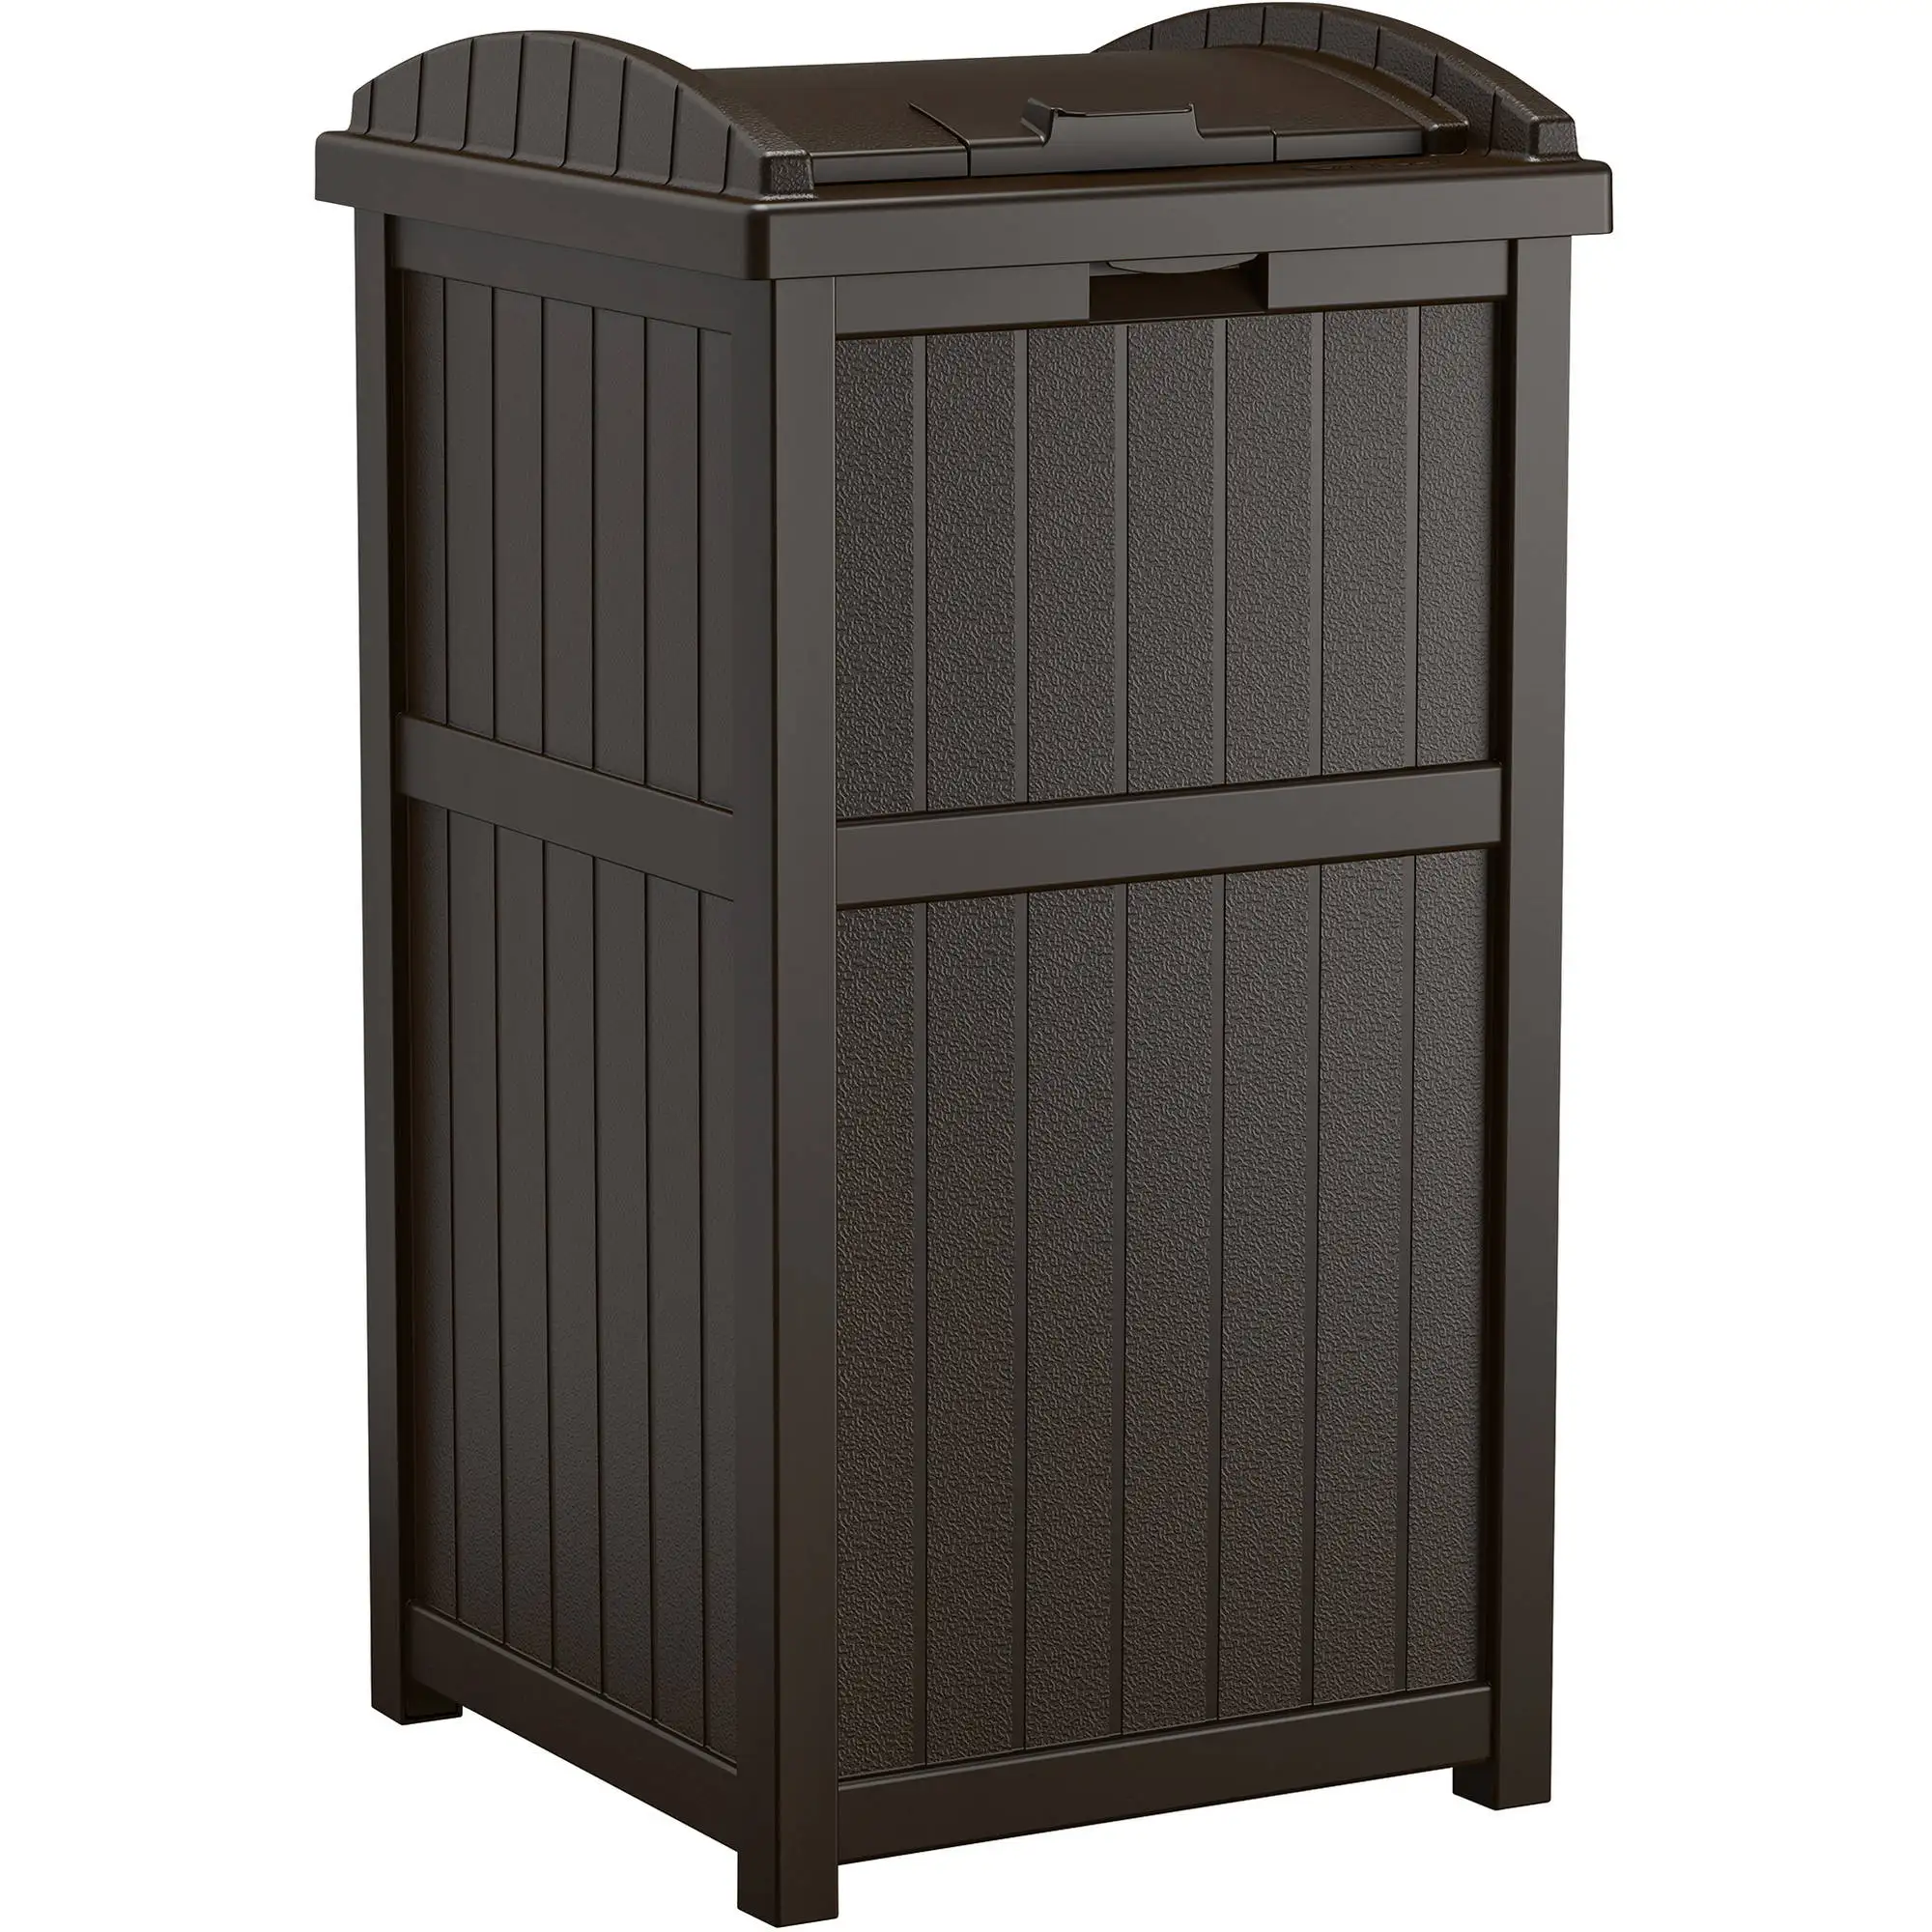 Trashcan Hideaway Outdoor Garbage Waste Bin, 33 Gallon